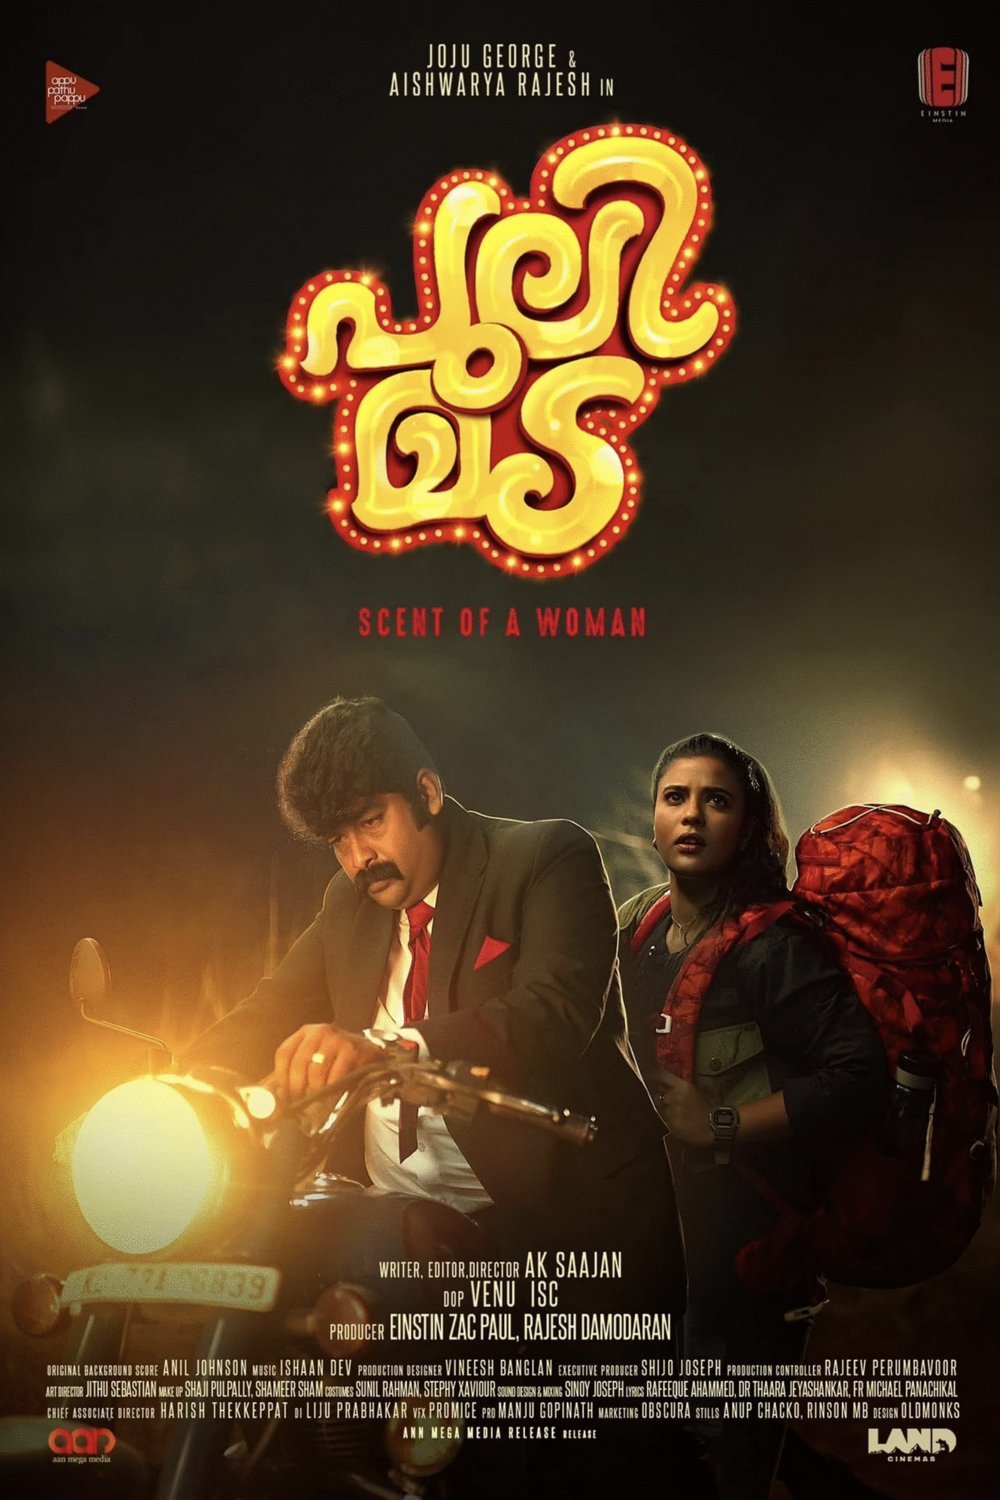 Malayalam poster of the movie Pulimada